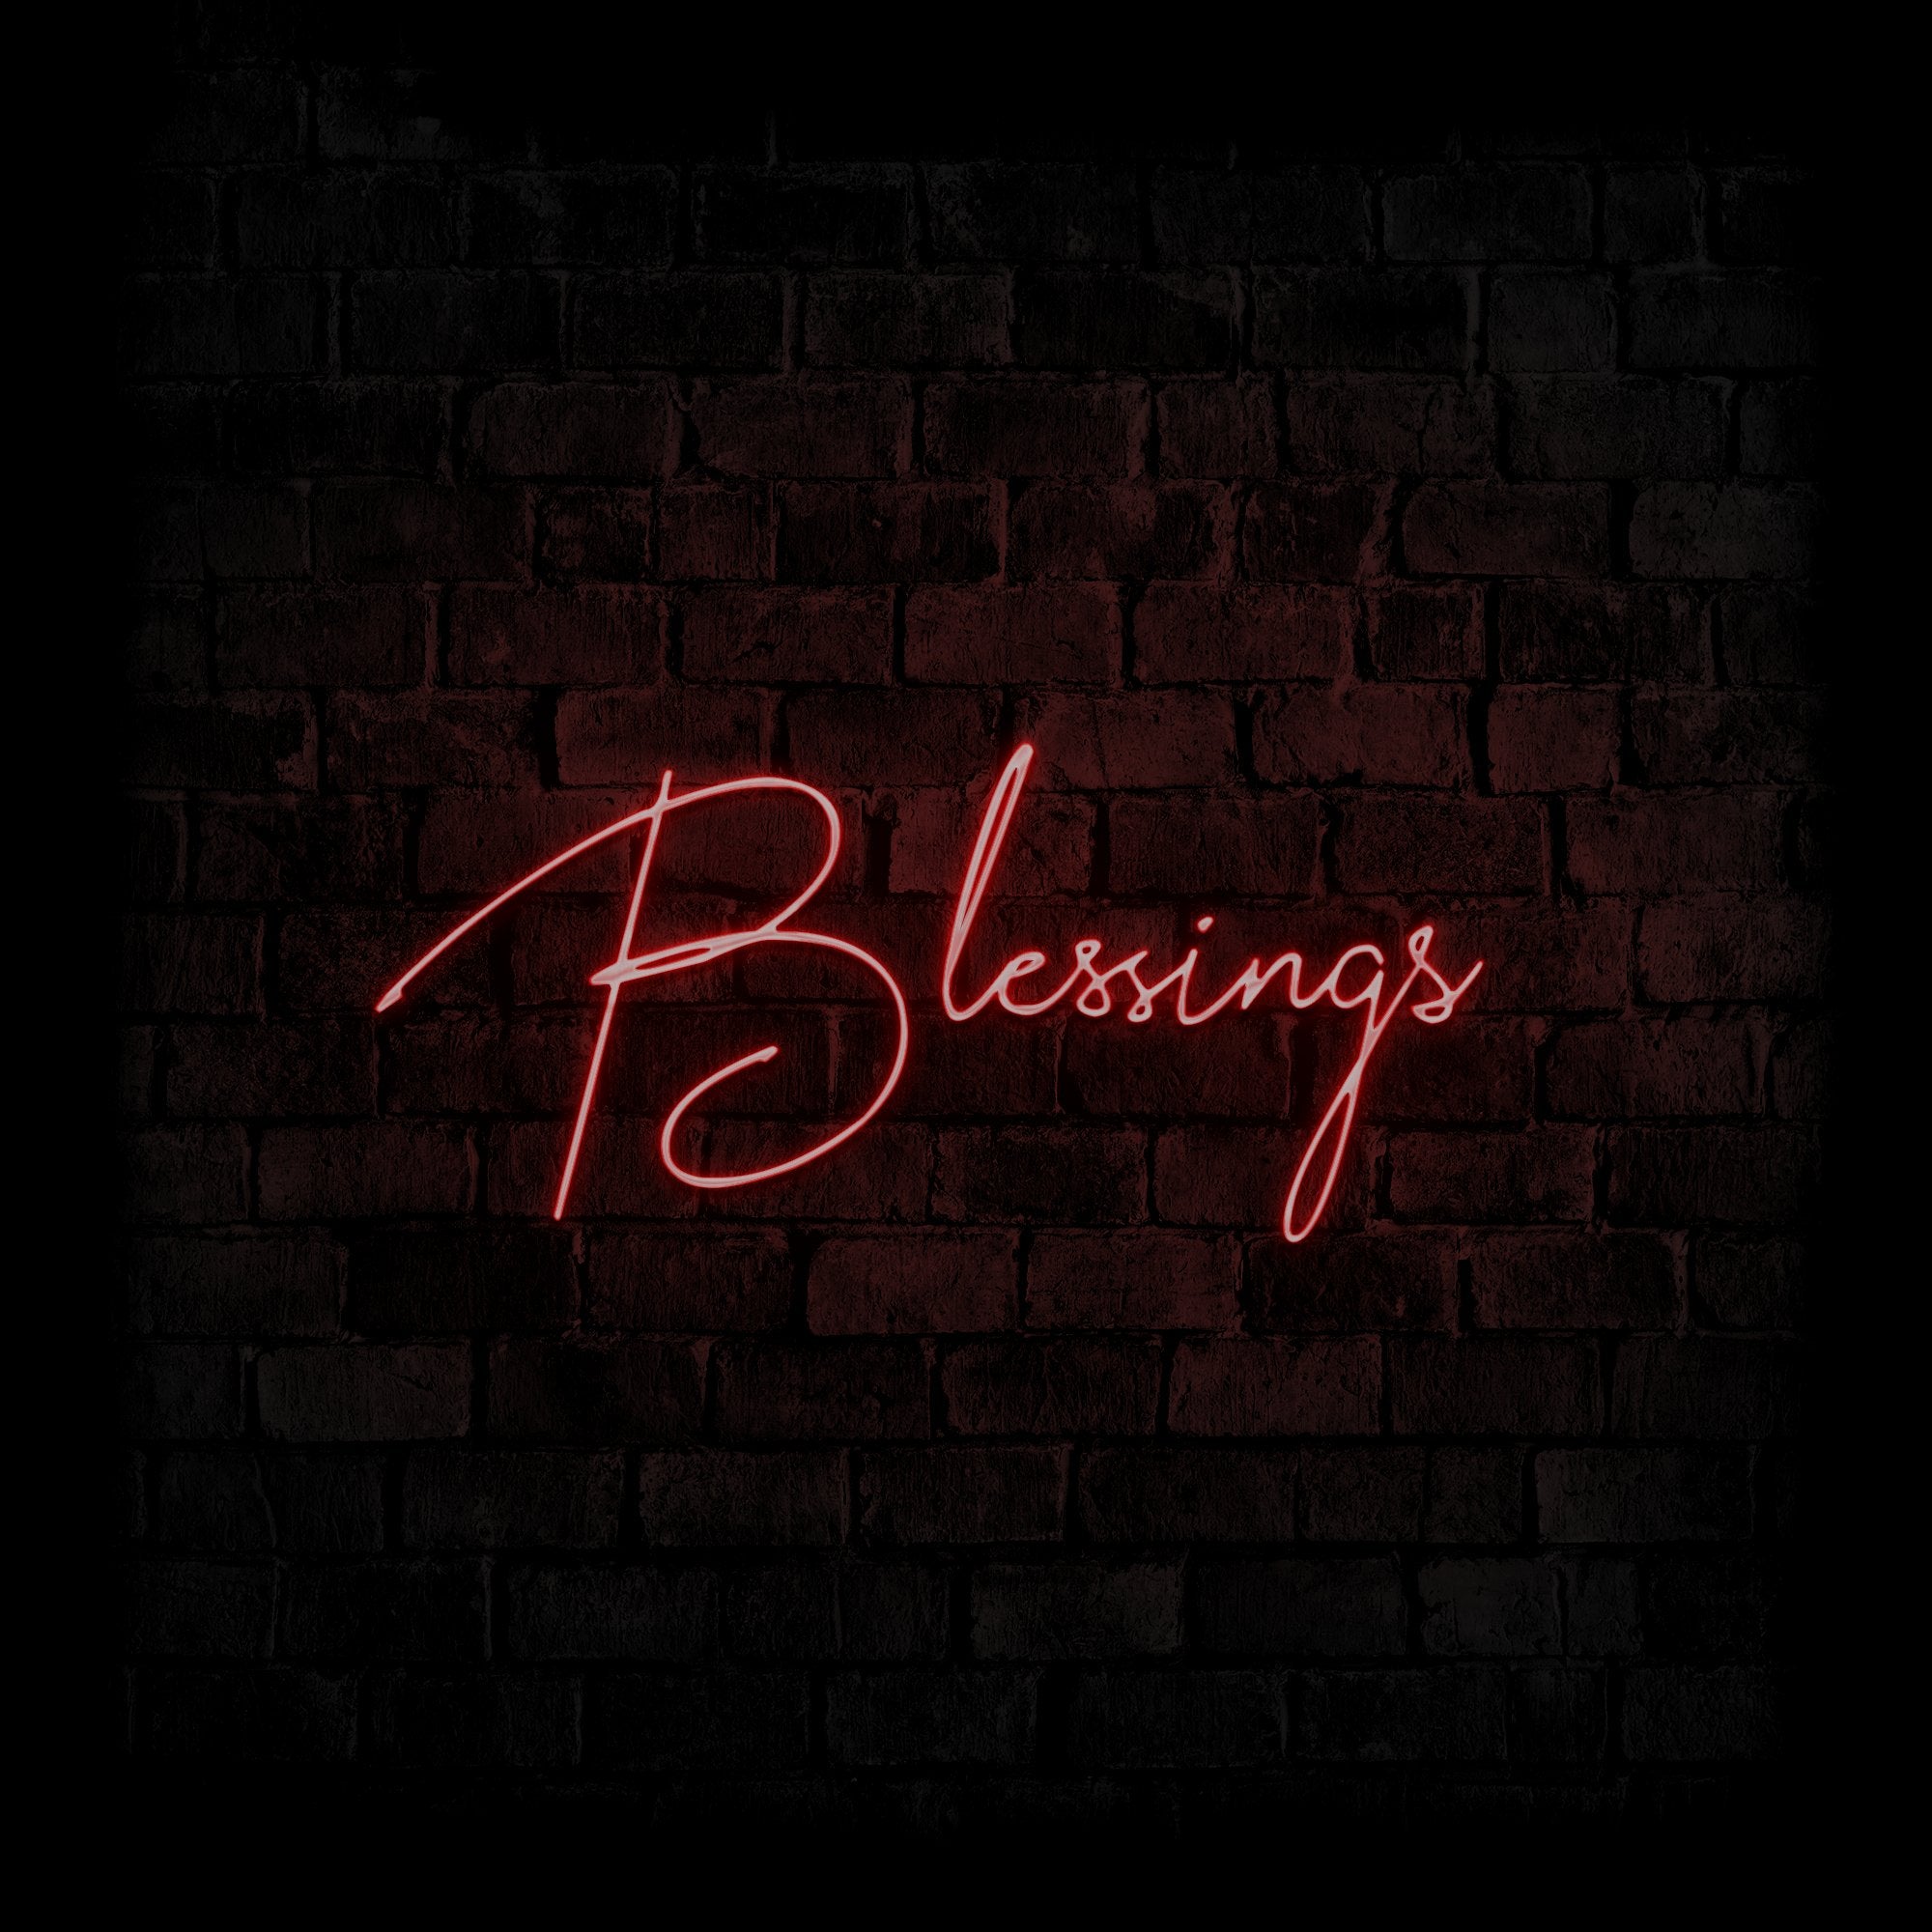 Blessings - Neonschild - Official Neon - led neon schild schriftzug personalisiert